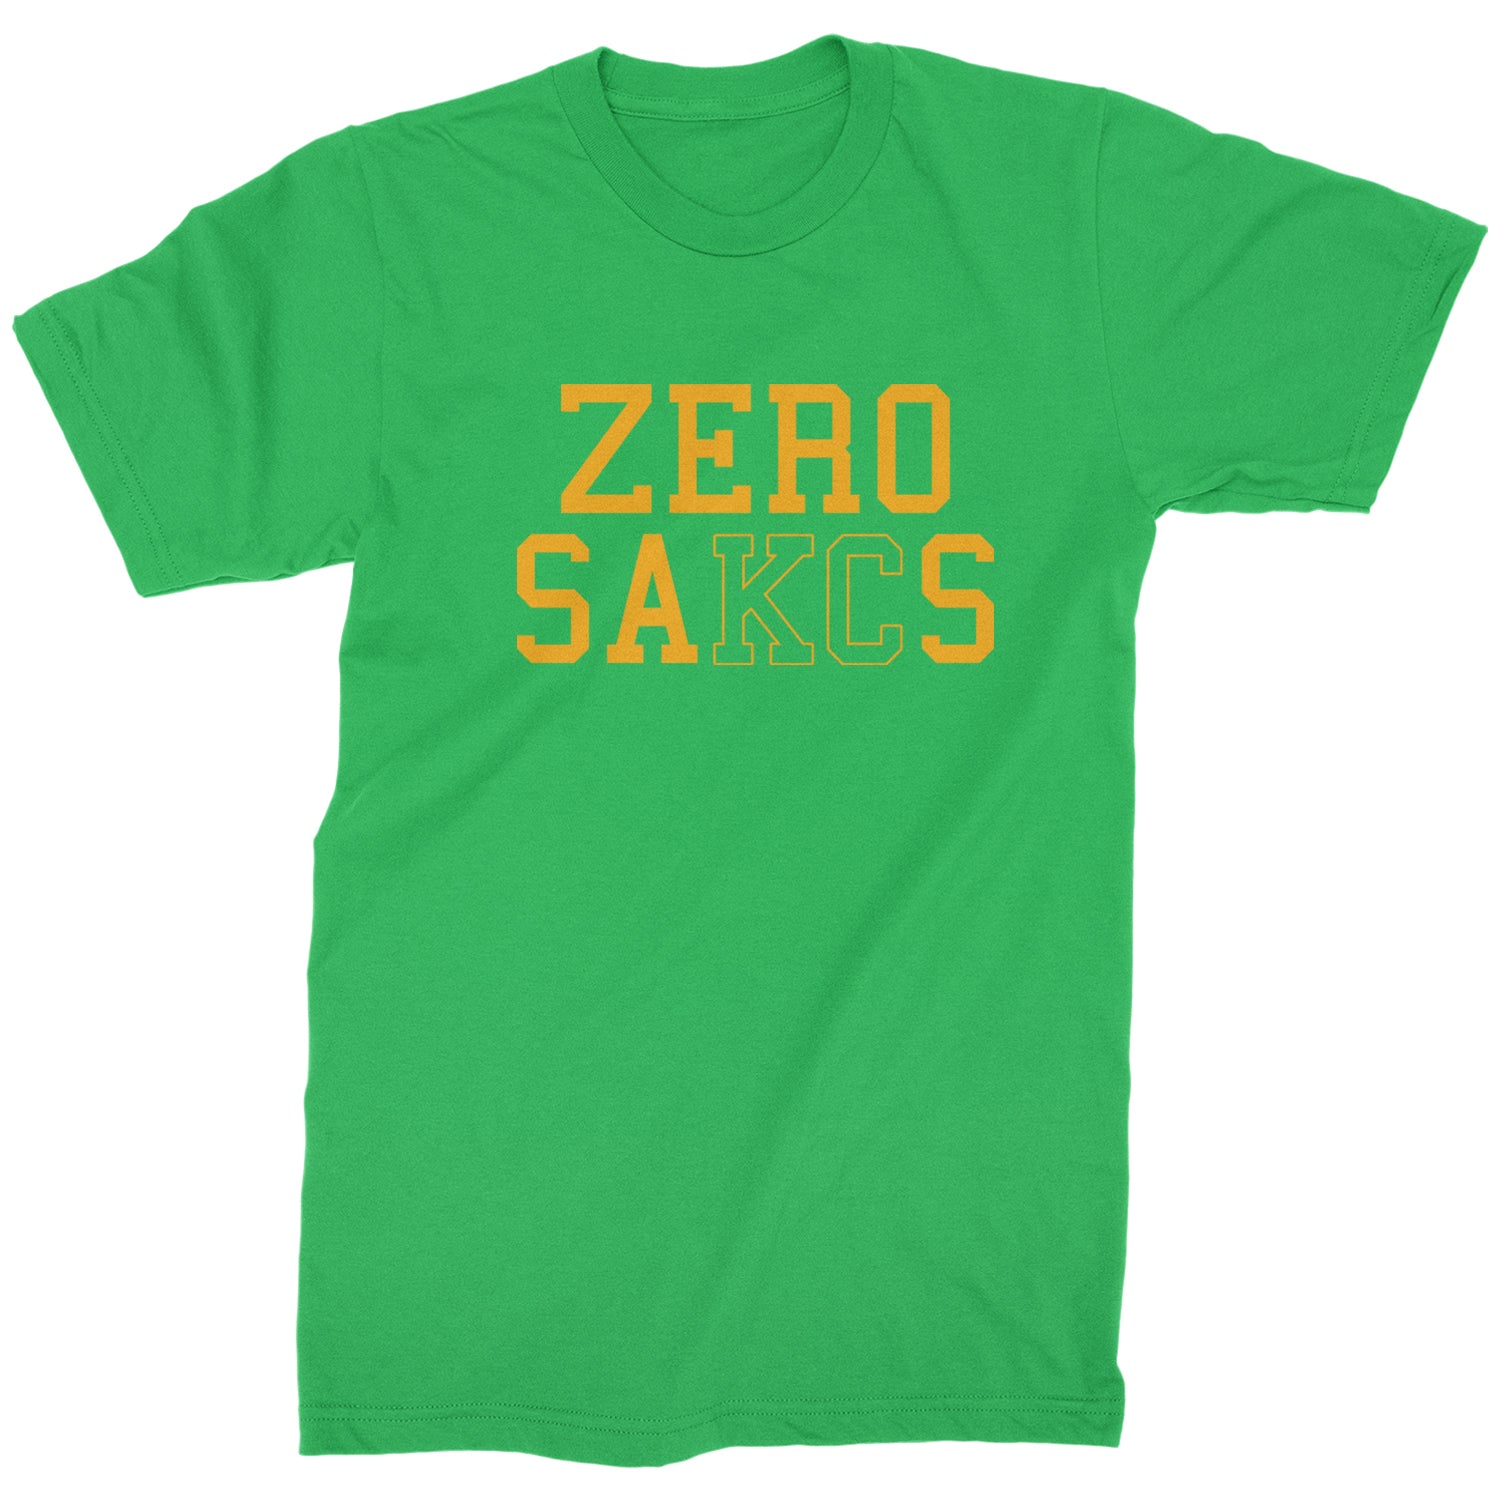 Zero Sacks Kansas City Mens T-shirt ball, brown, foot, football, kelc, orlando, patrick, sacks, sakcs by Expression Tees